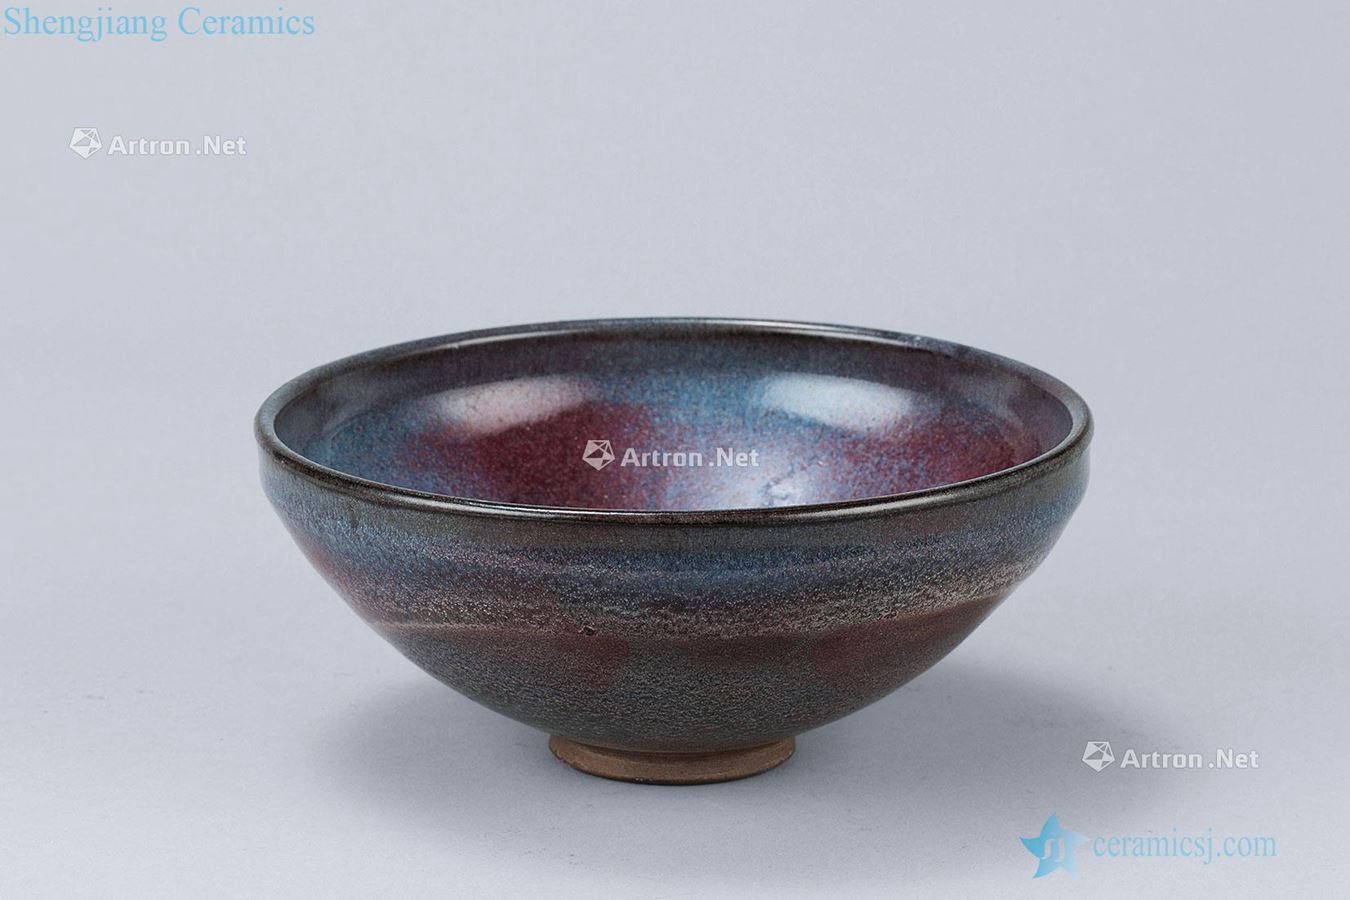 The yuan dynasty (1279-1368) erythema masterpieces big bowl